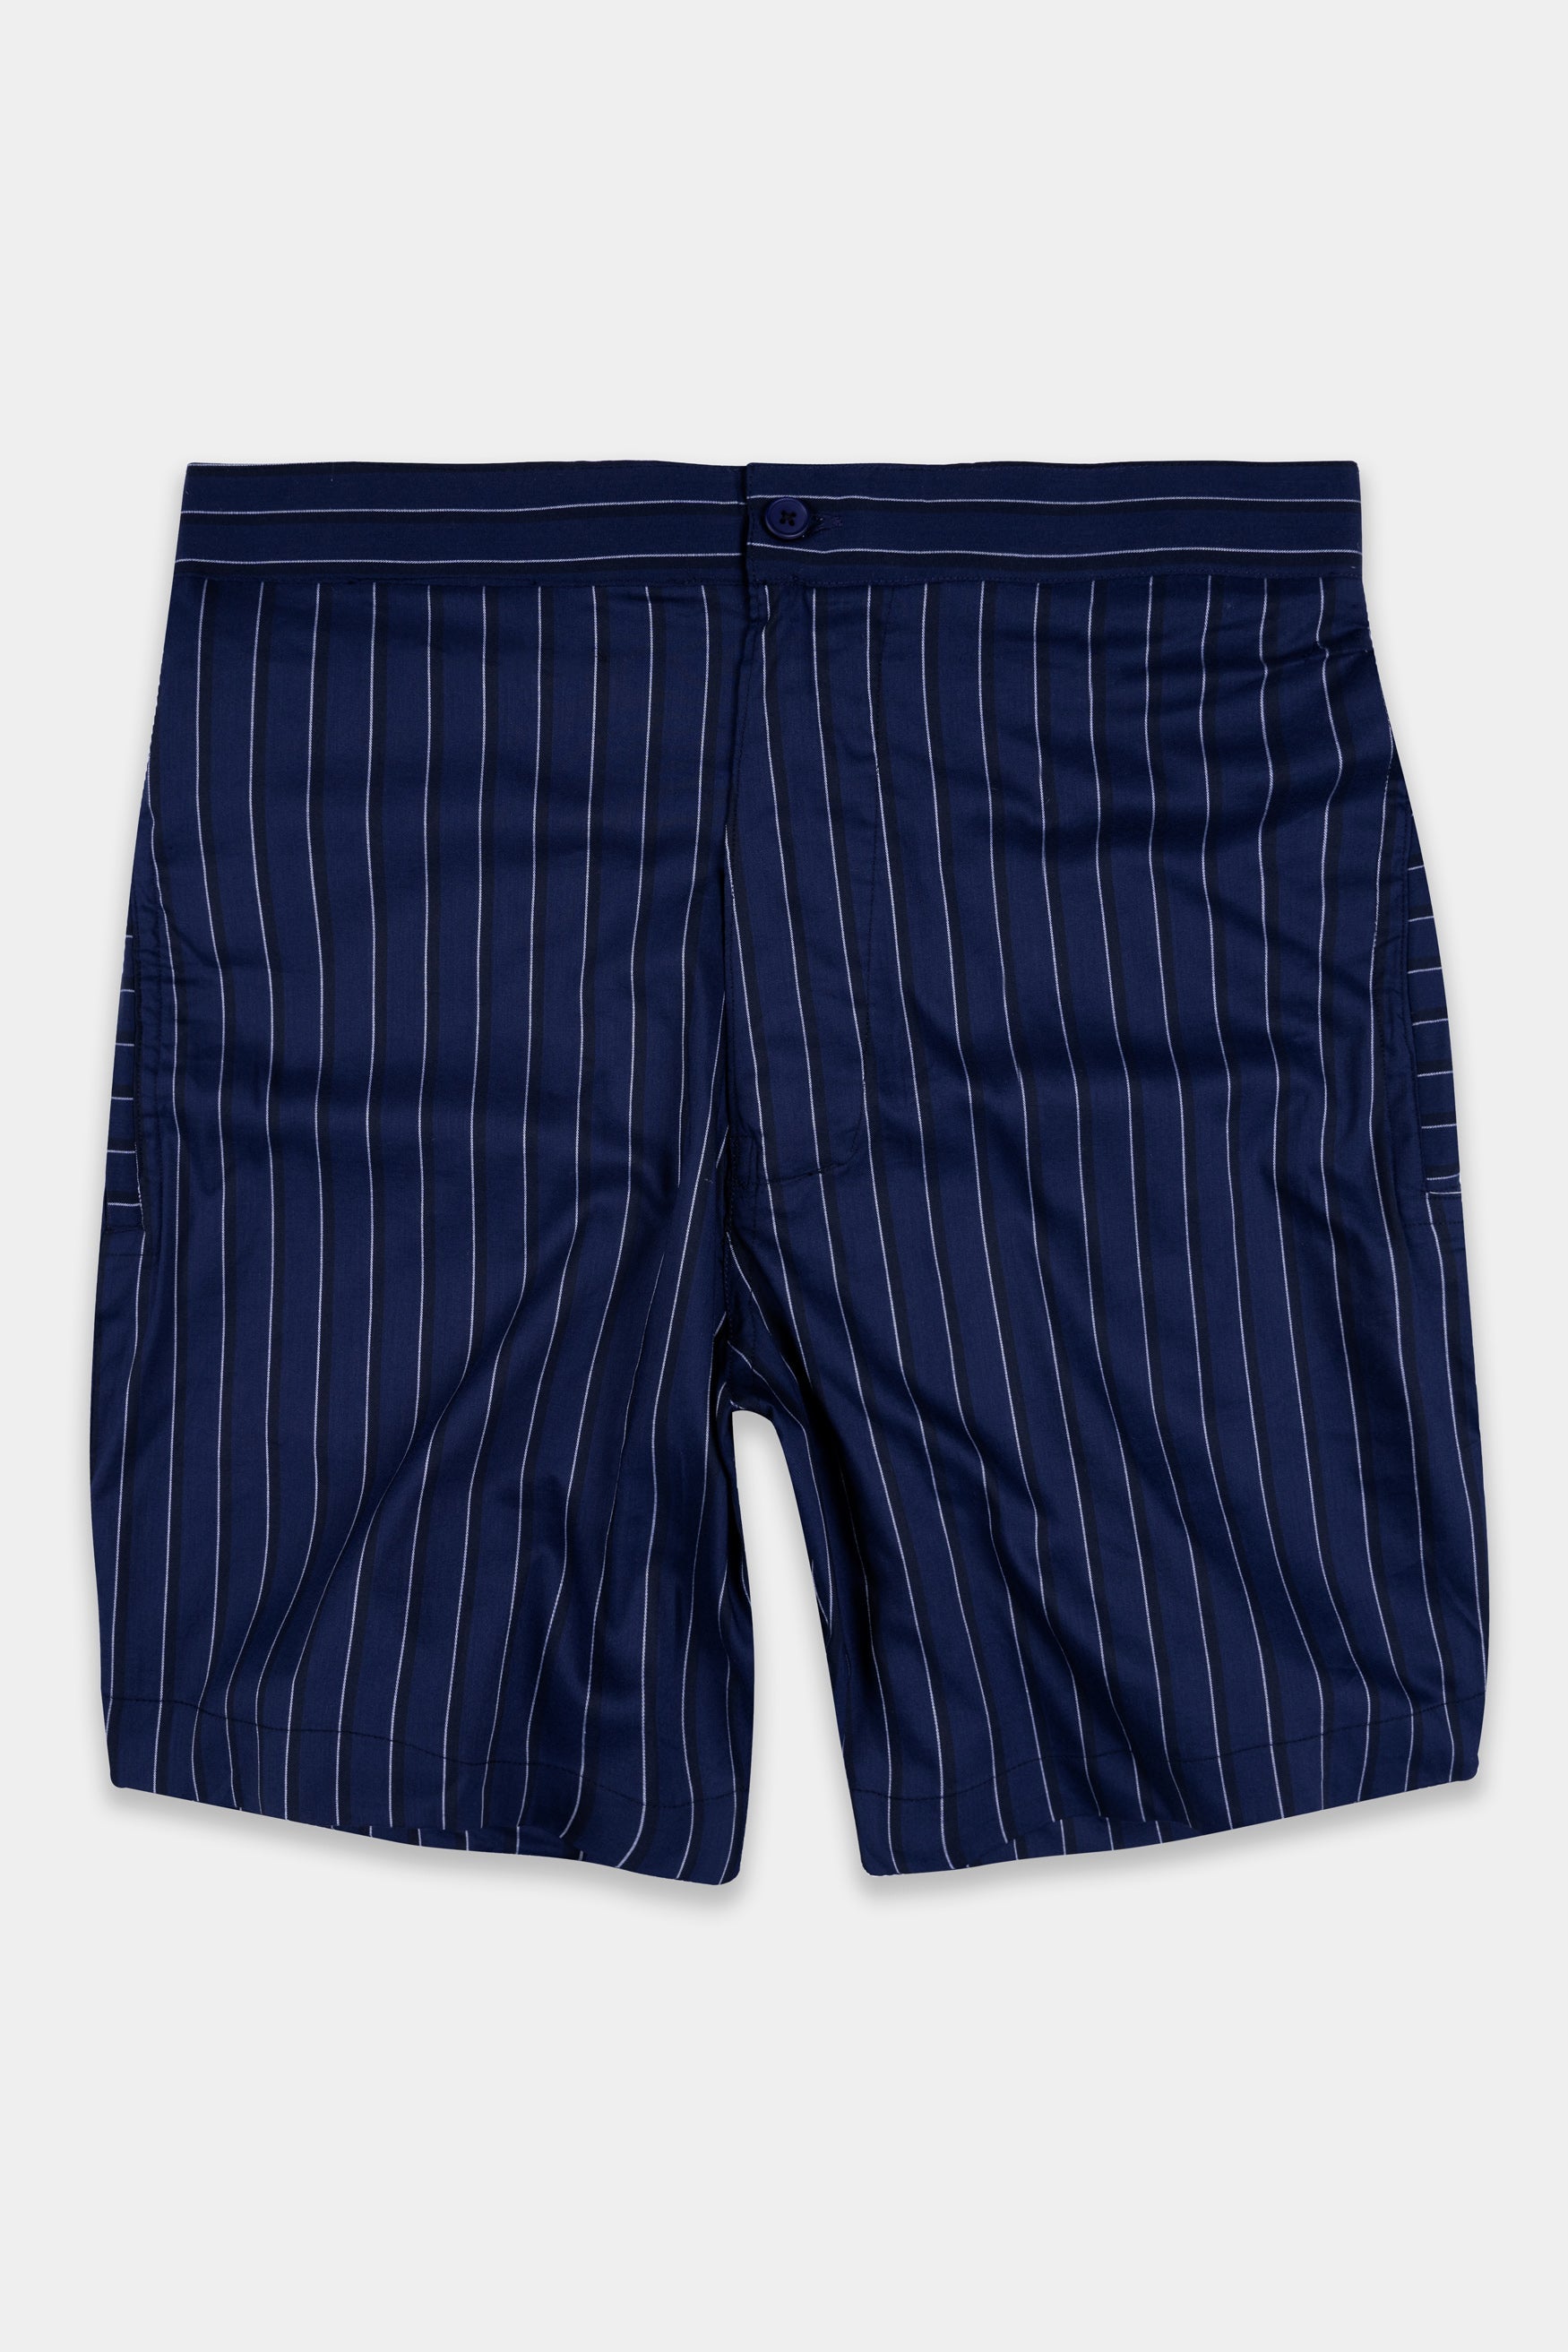 Tangaroa Blue Striped Twill Premium Cotton Shorts SR402-28, SR402-30, SR402-32, SR402-34, SR402-36, SR402-38, SR402-40, SR402-42, SR402-44